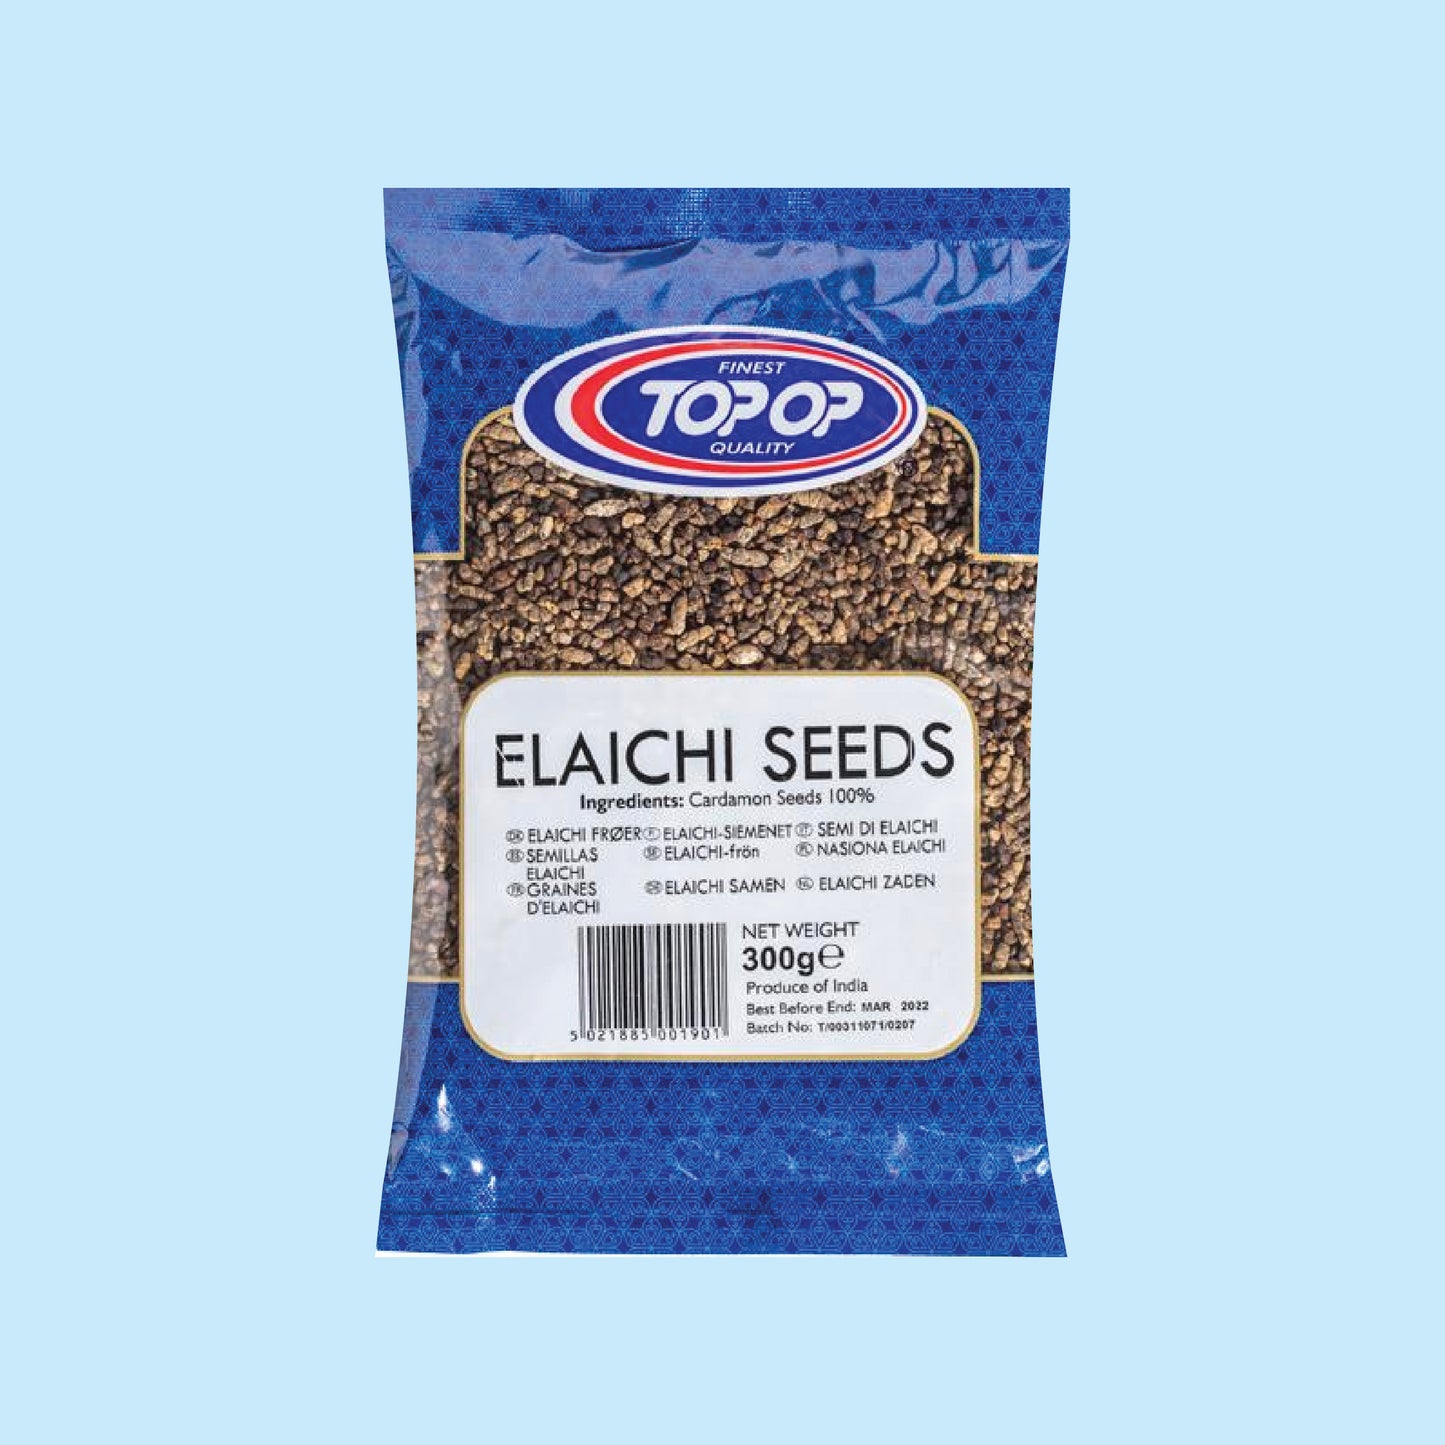 Top-Op Elaichi (Cardamom) Seeds